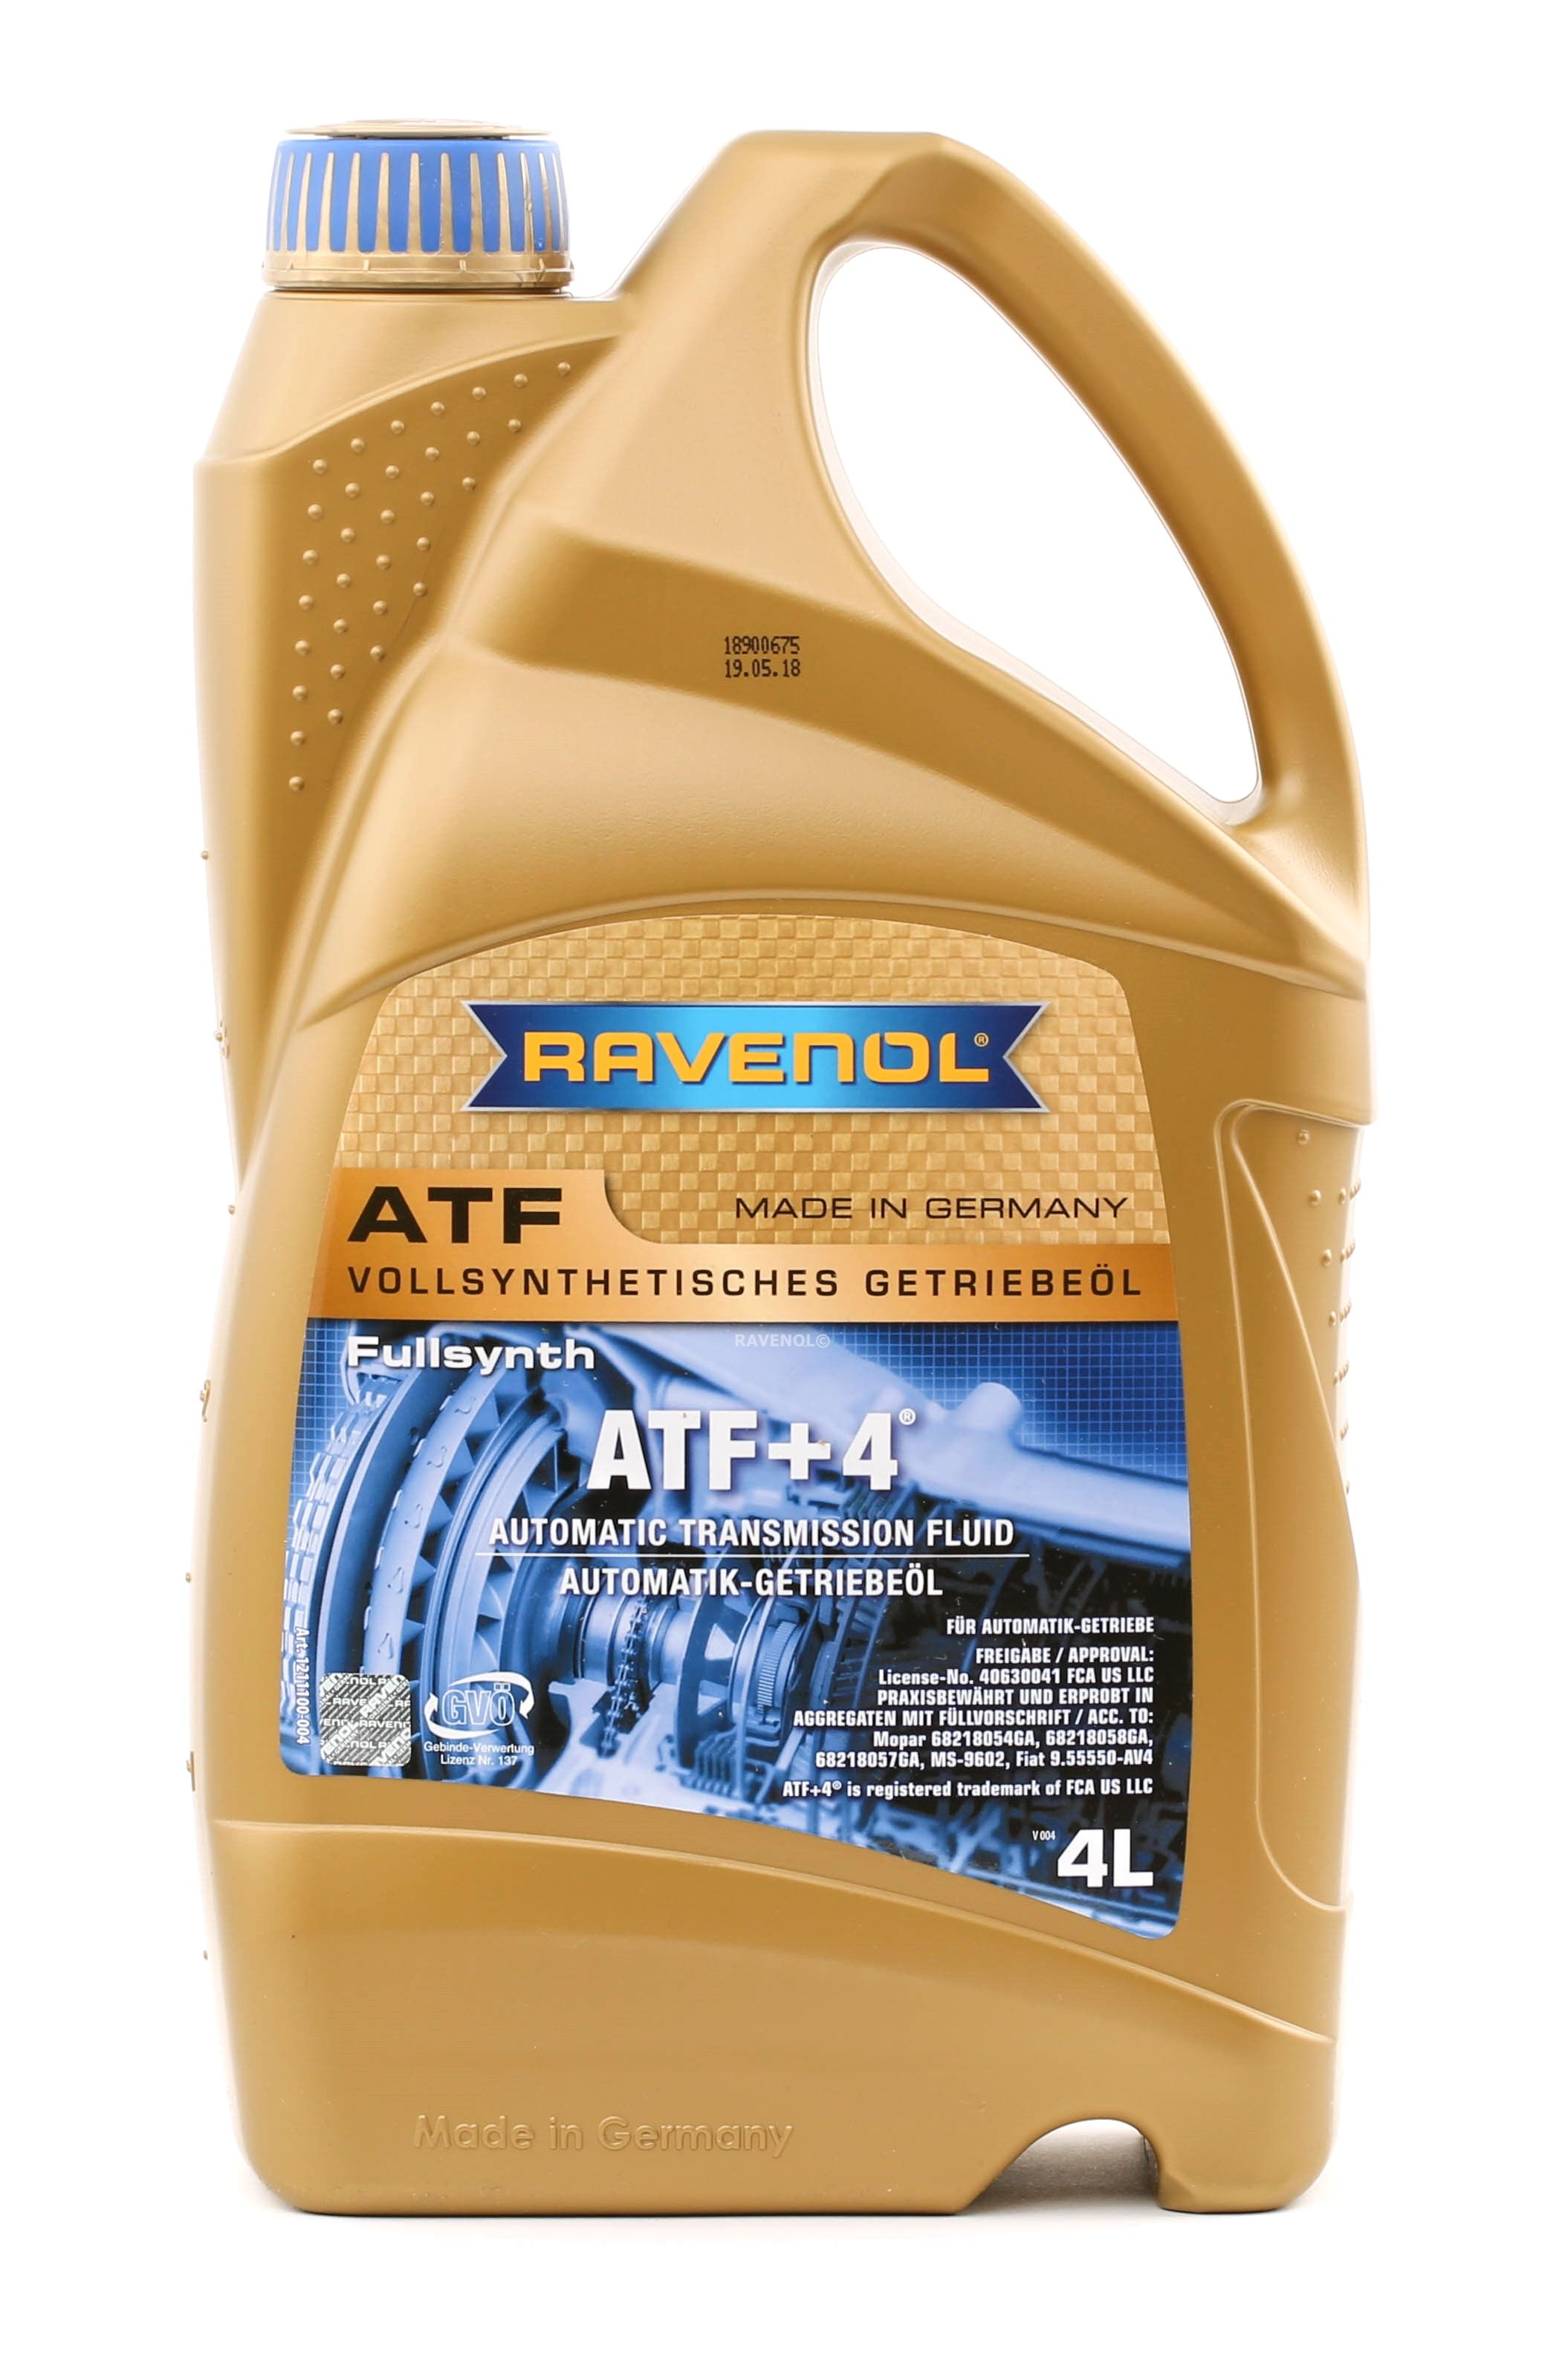 ATF Fluid - RAVENOL Mercon LV Fluid - RAVENOL AMERICA LLC